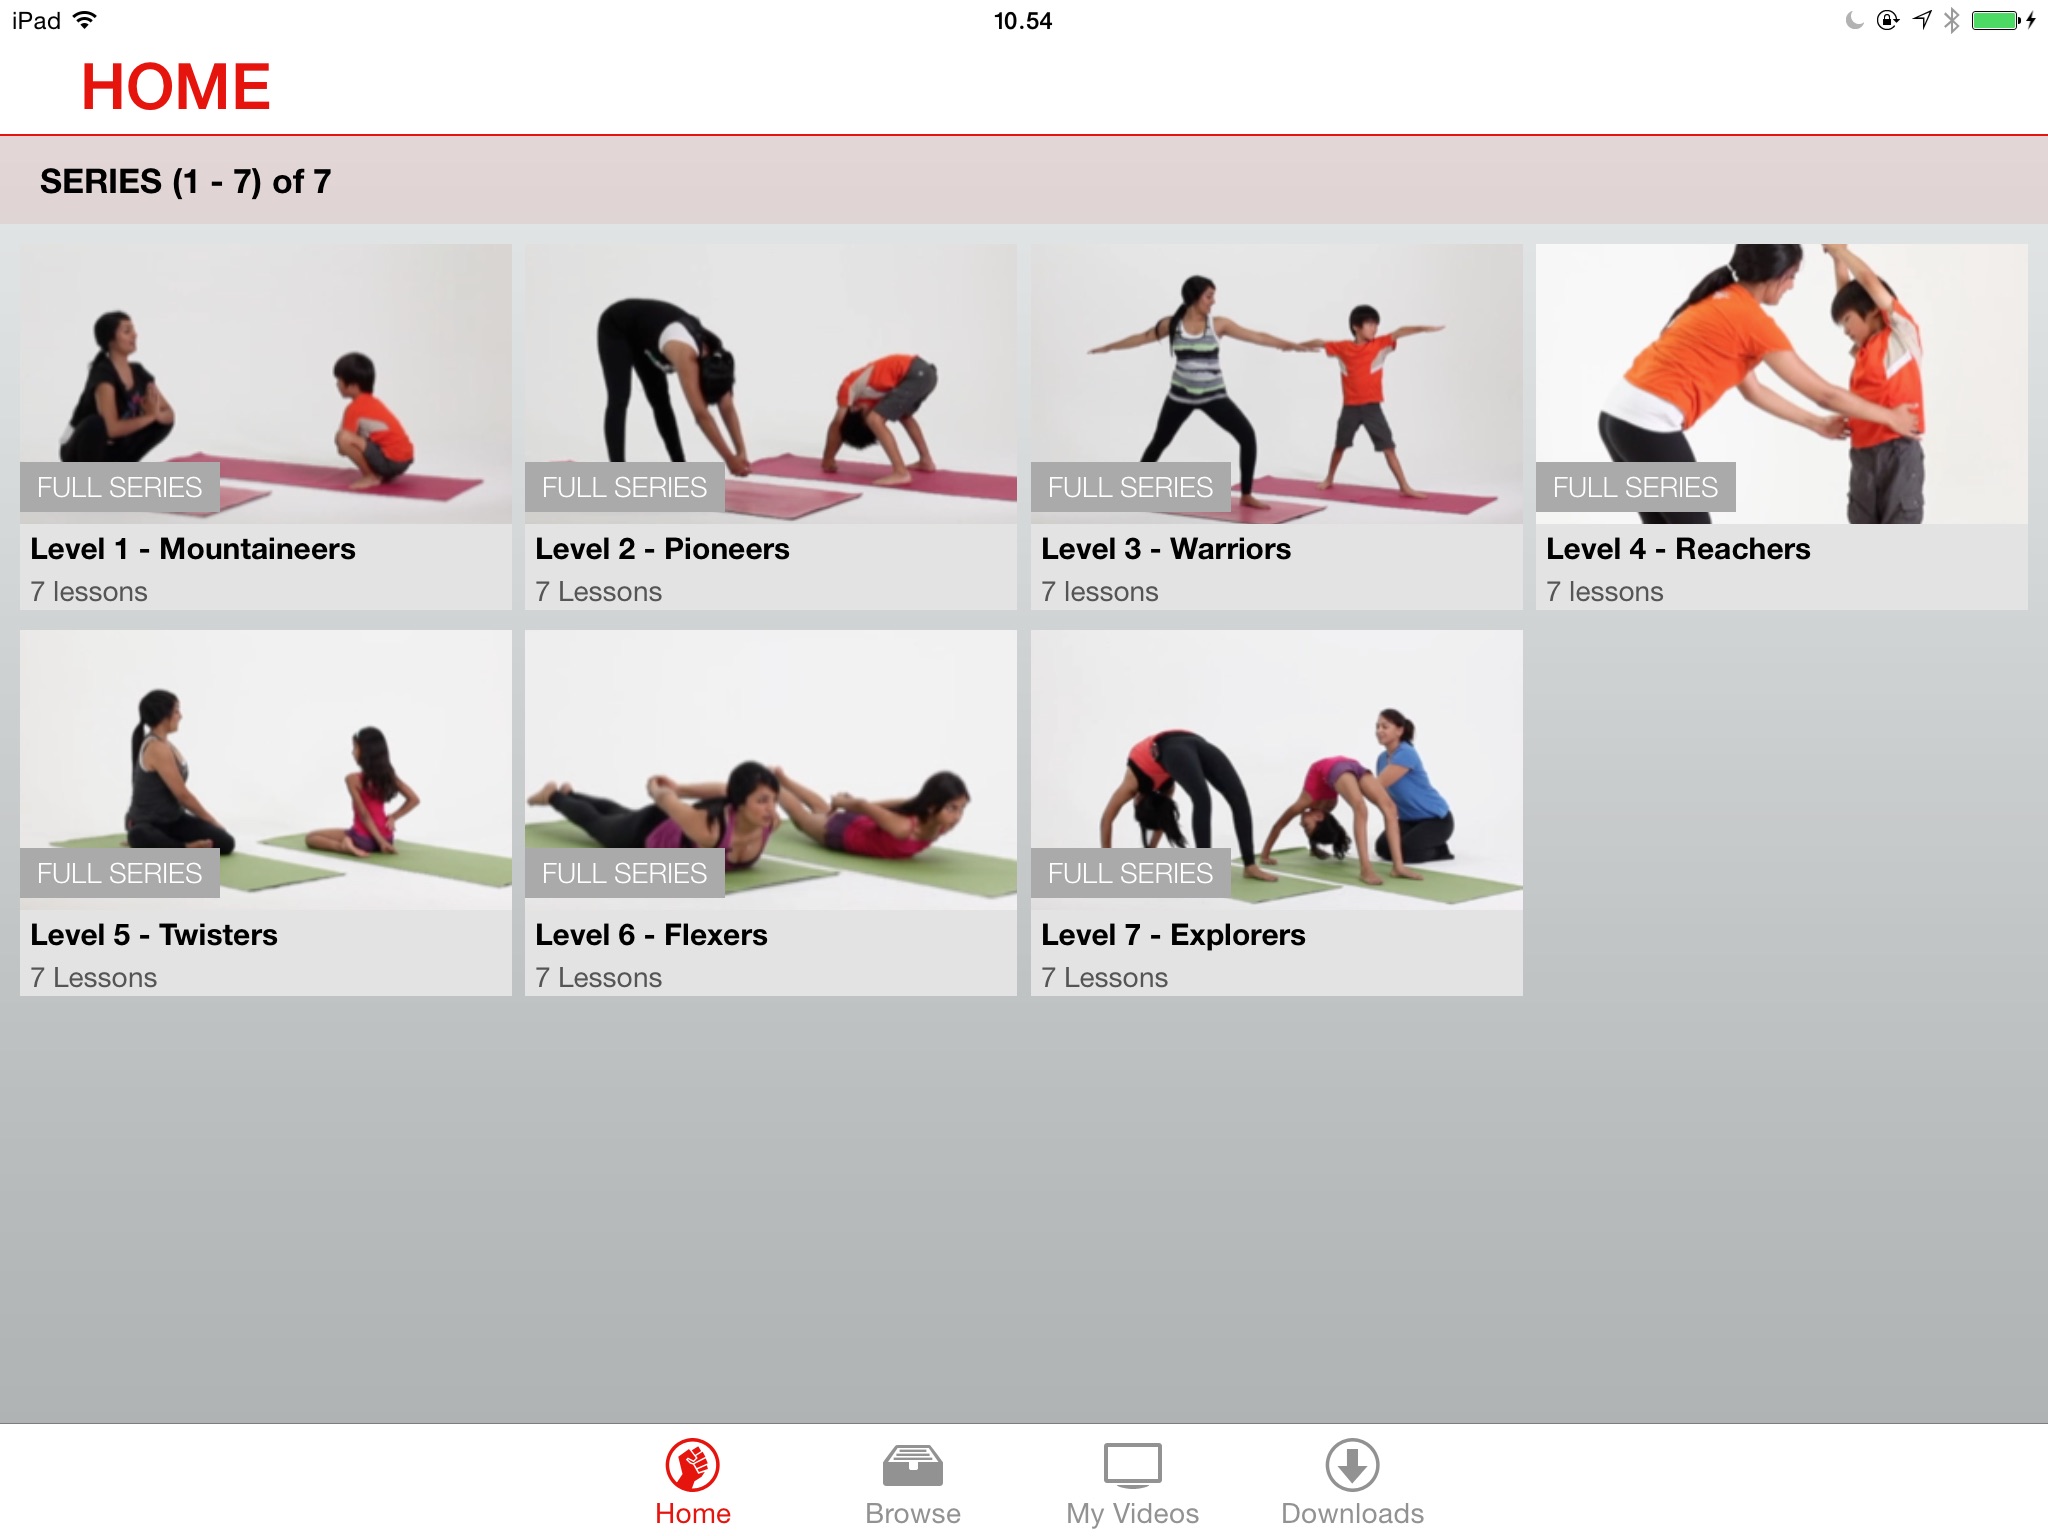 49poses - Children's Yoga Video Lessons for iPad screenshot 2